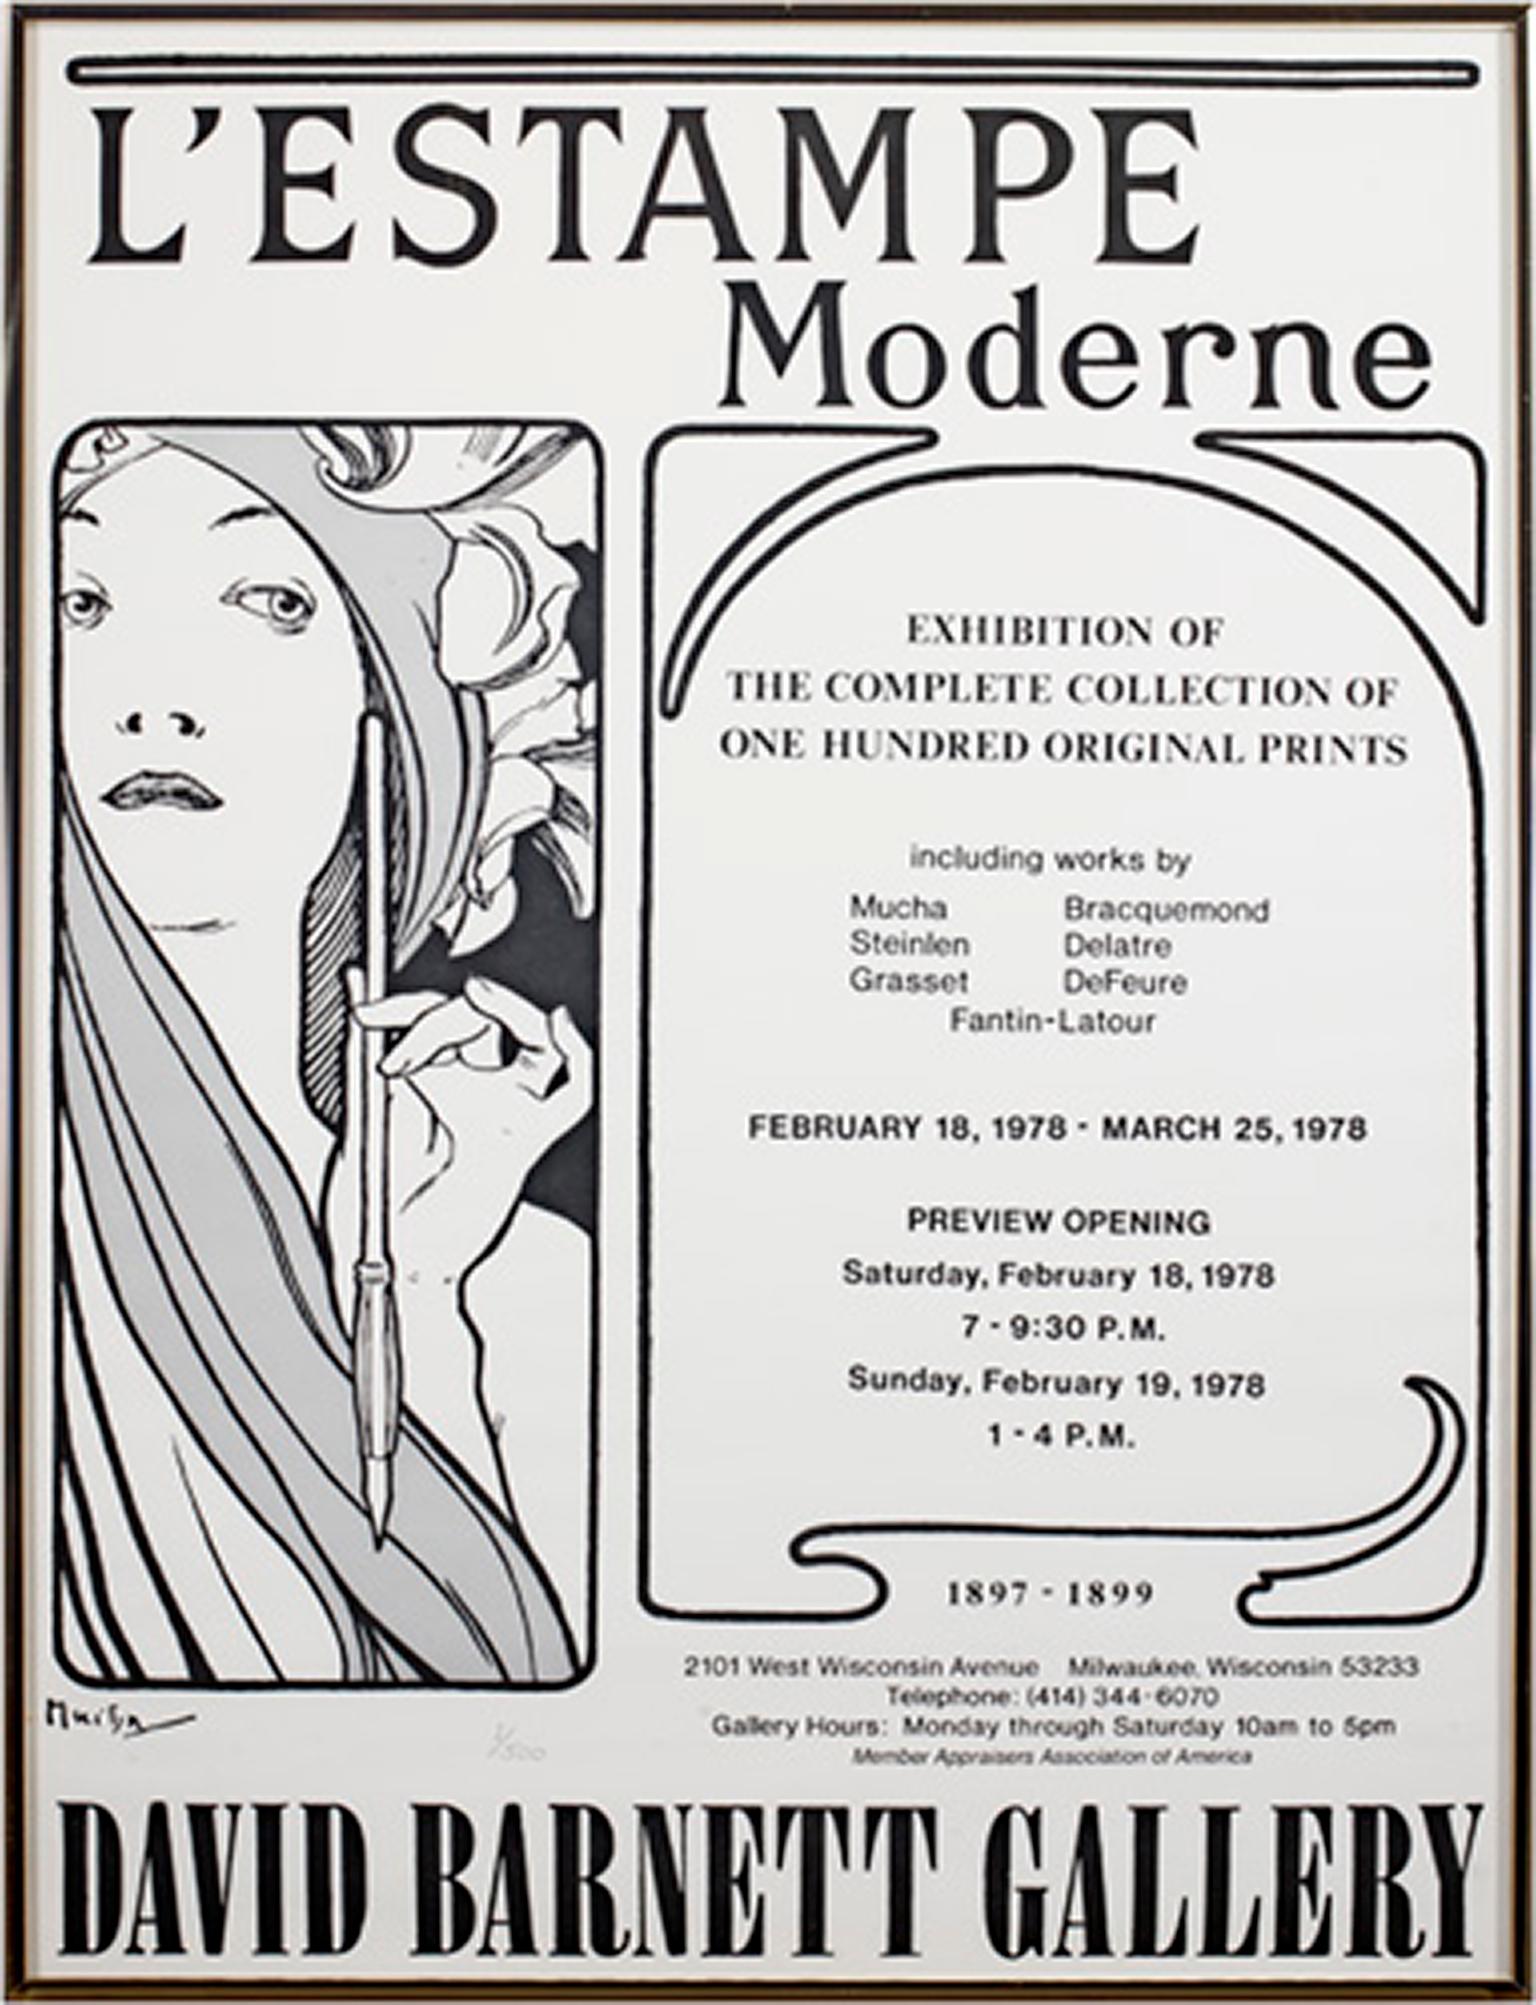 L'Estampe Moderne  - David Barnett Gallery Exhibition, Feb. 18, 1978 - Mar. 25, 